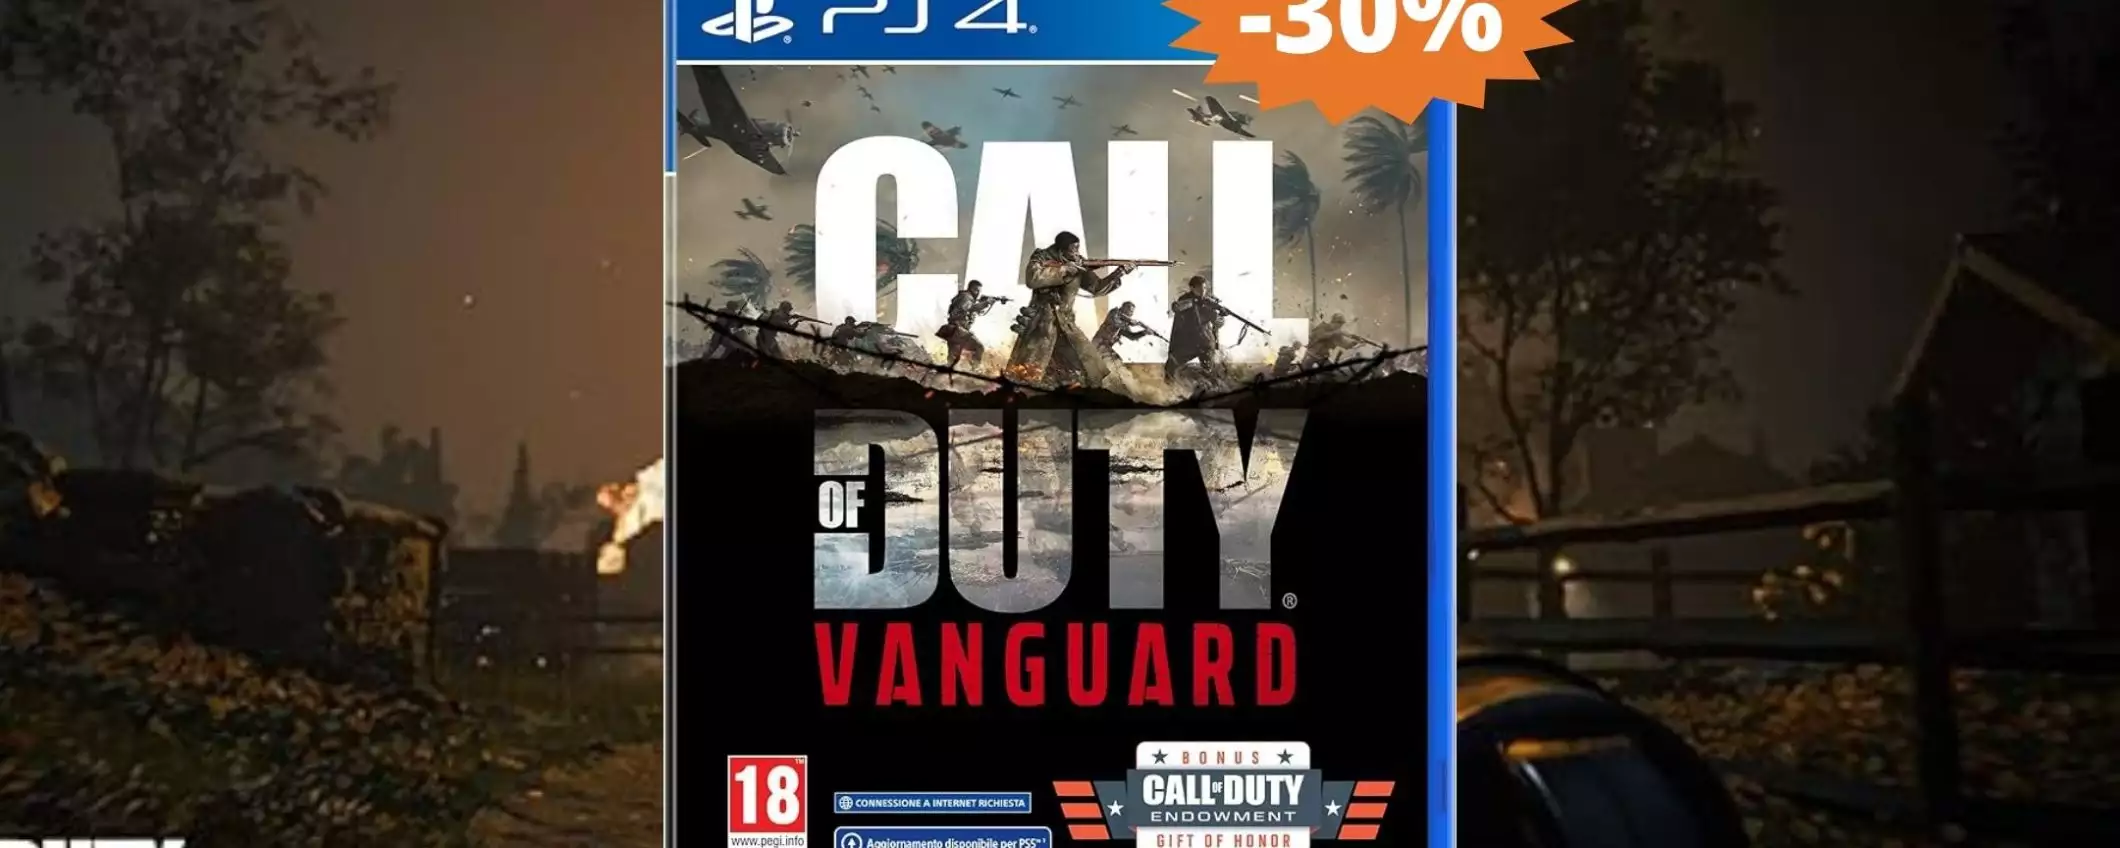 Call of Duty Vanguard per PS4: MEGA sconto del 30% su Amazon